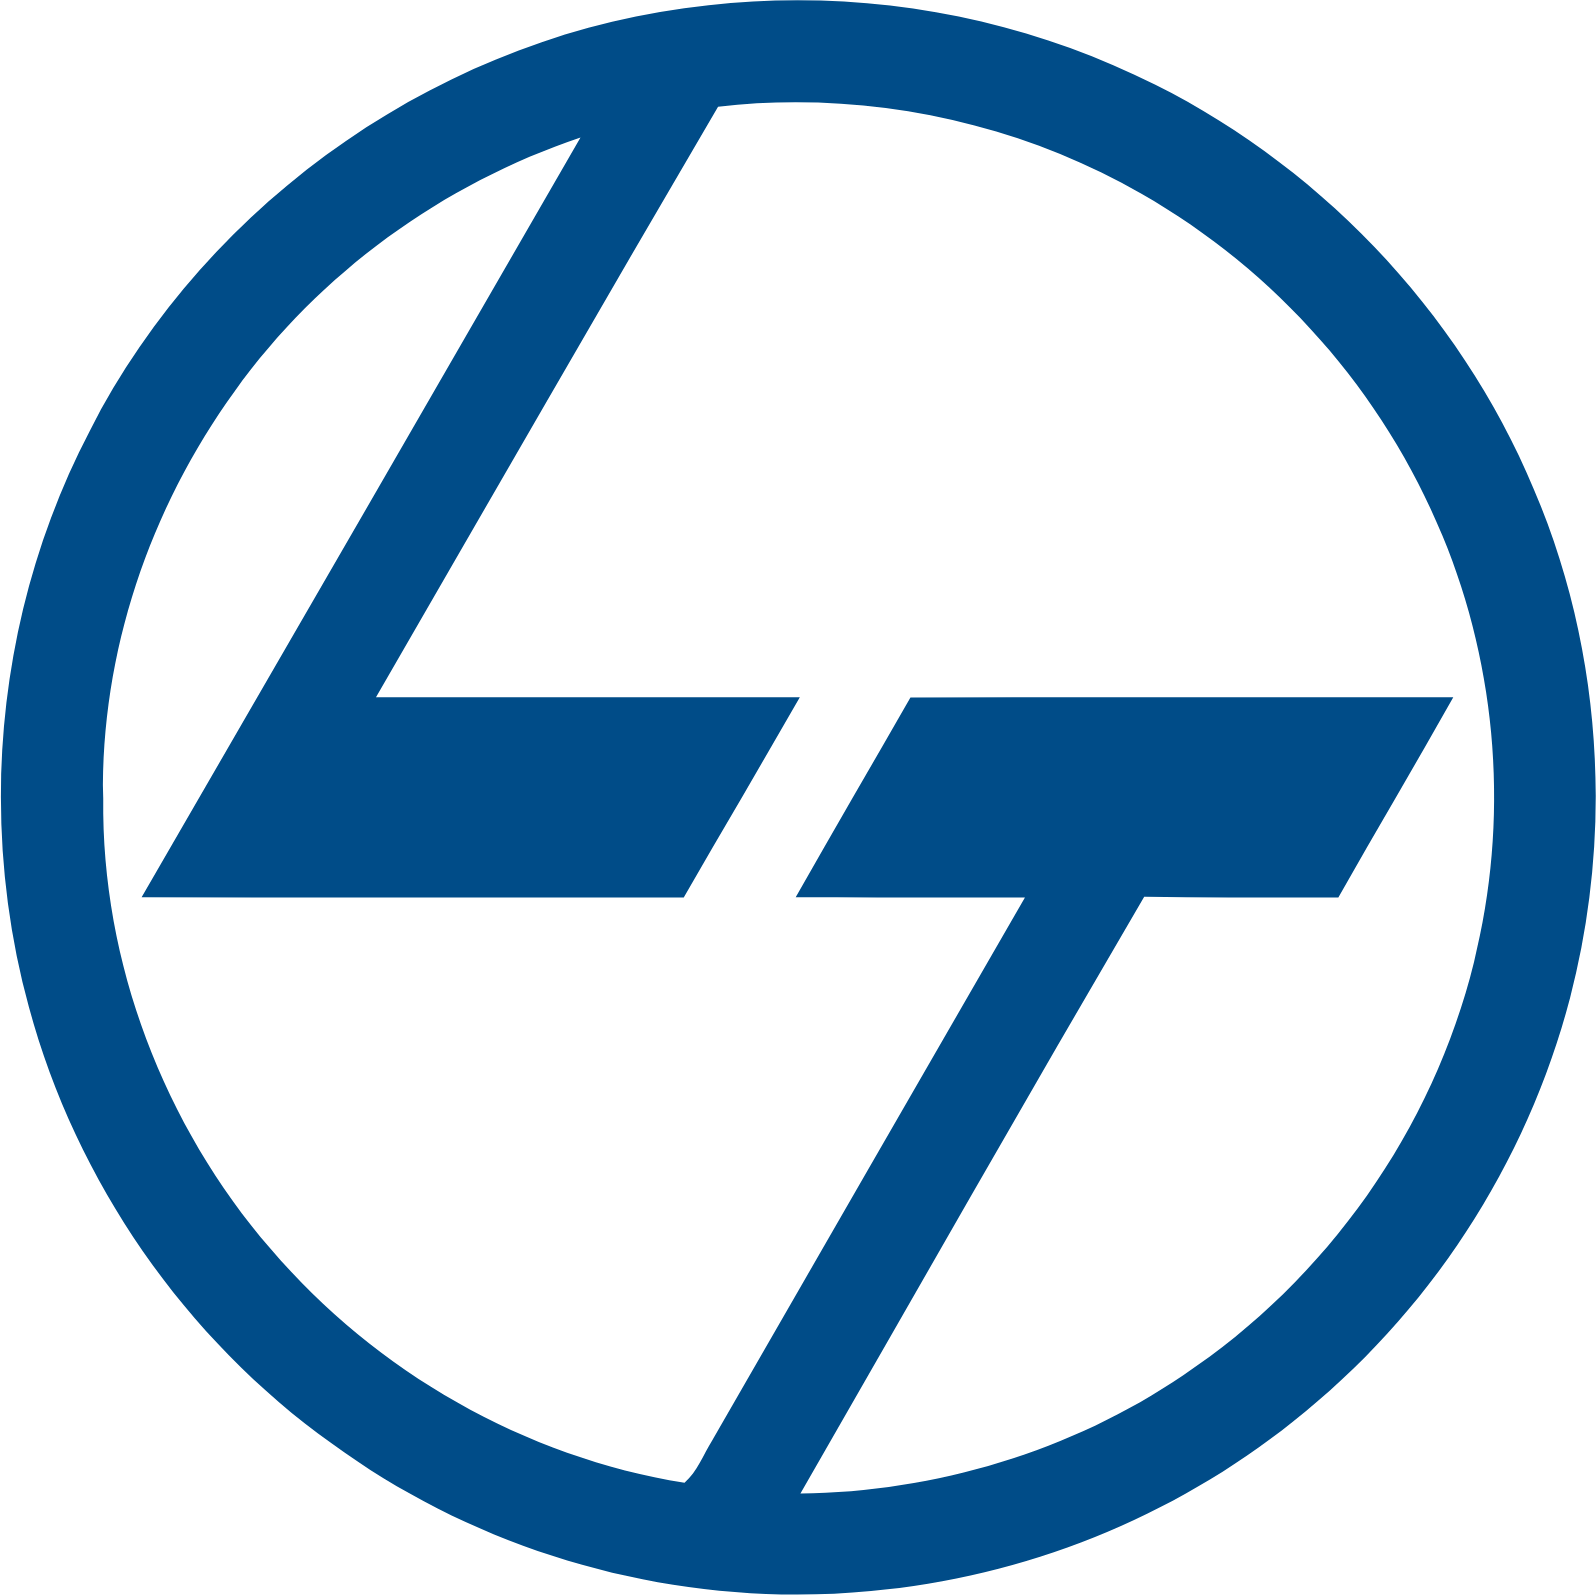 LTIMindtree logo (PNG transparent)